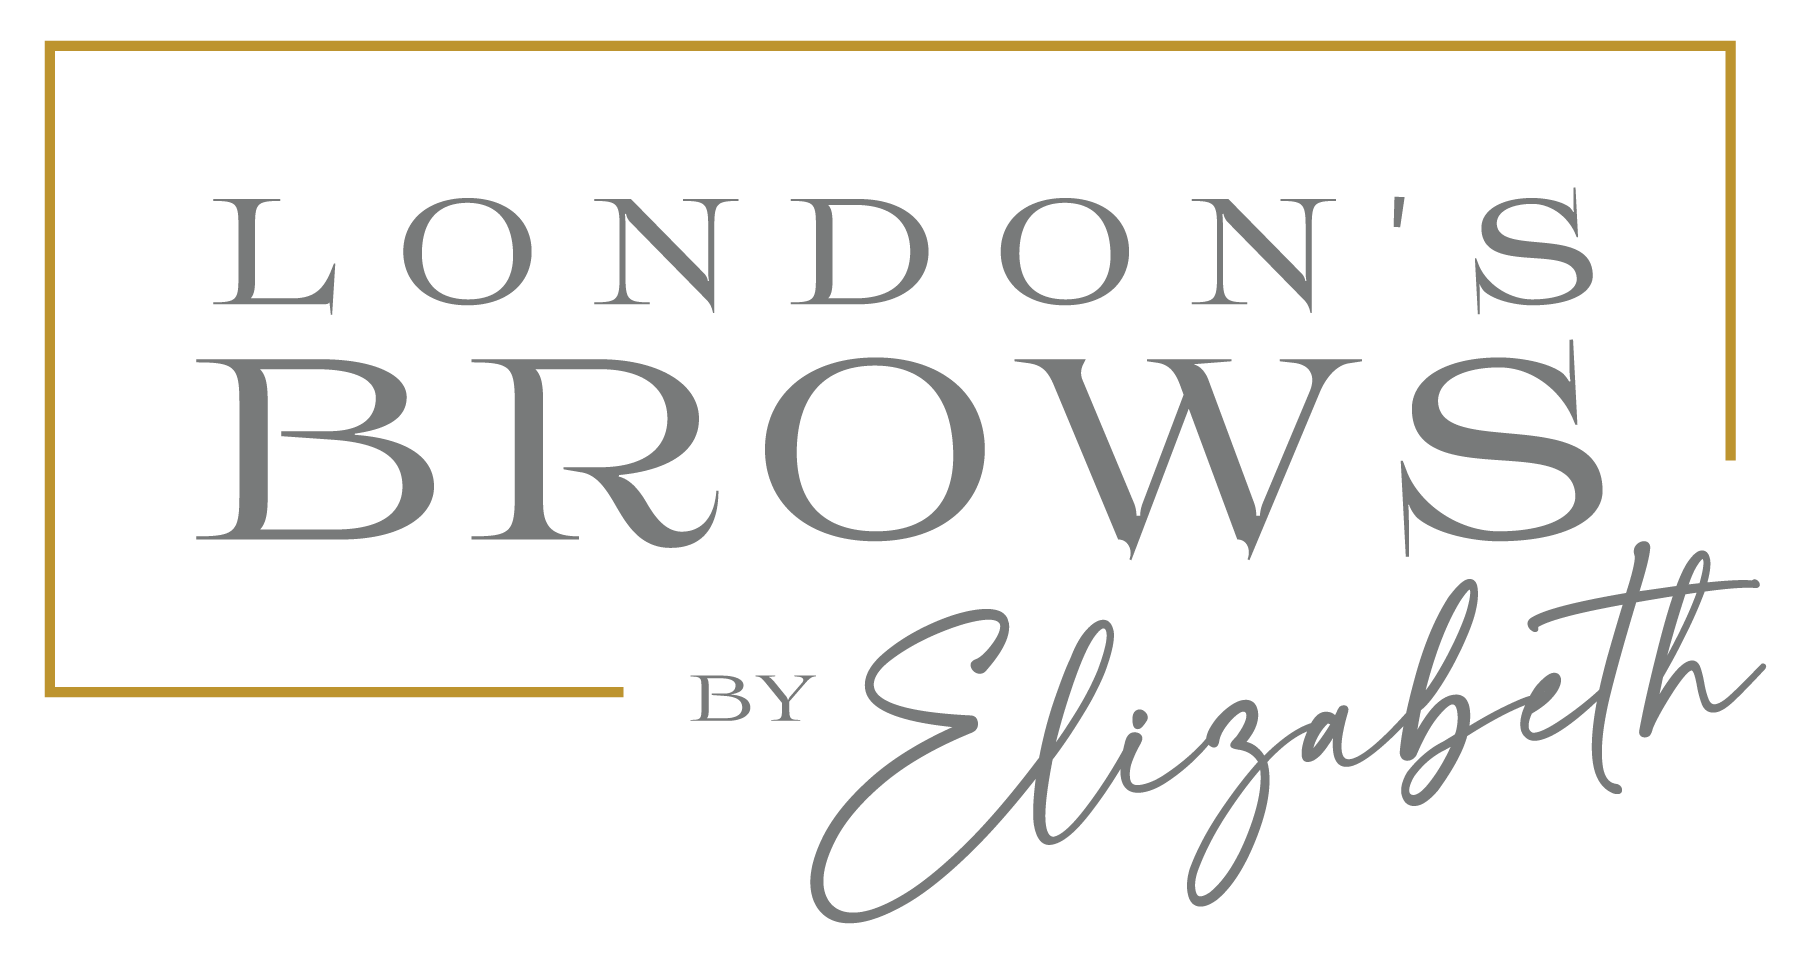 London's Brows By Elizabeth